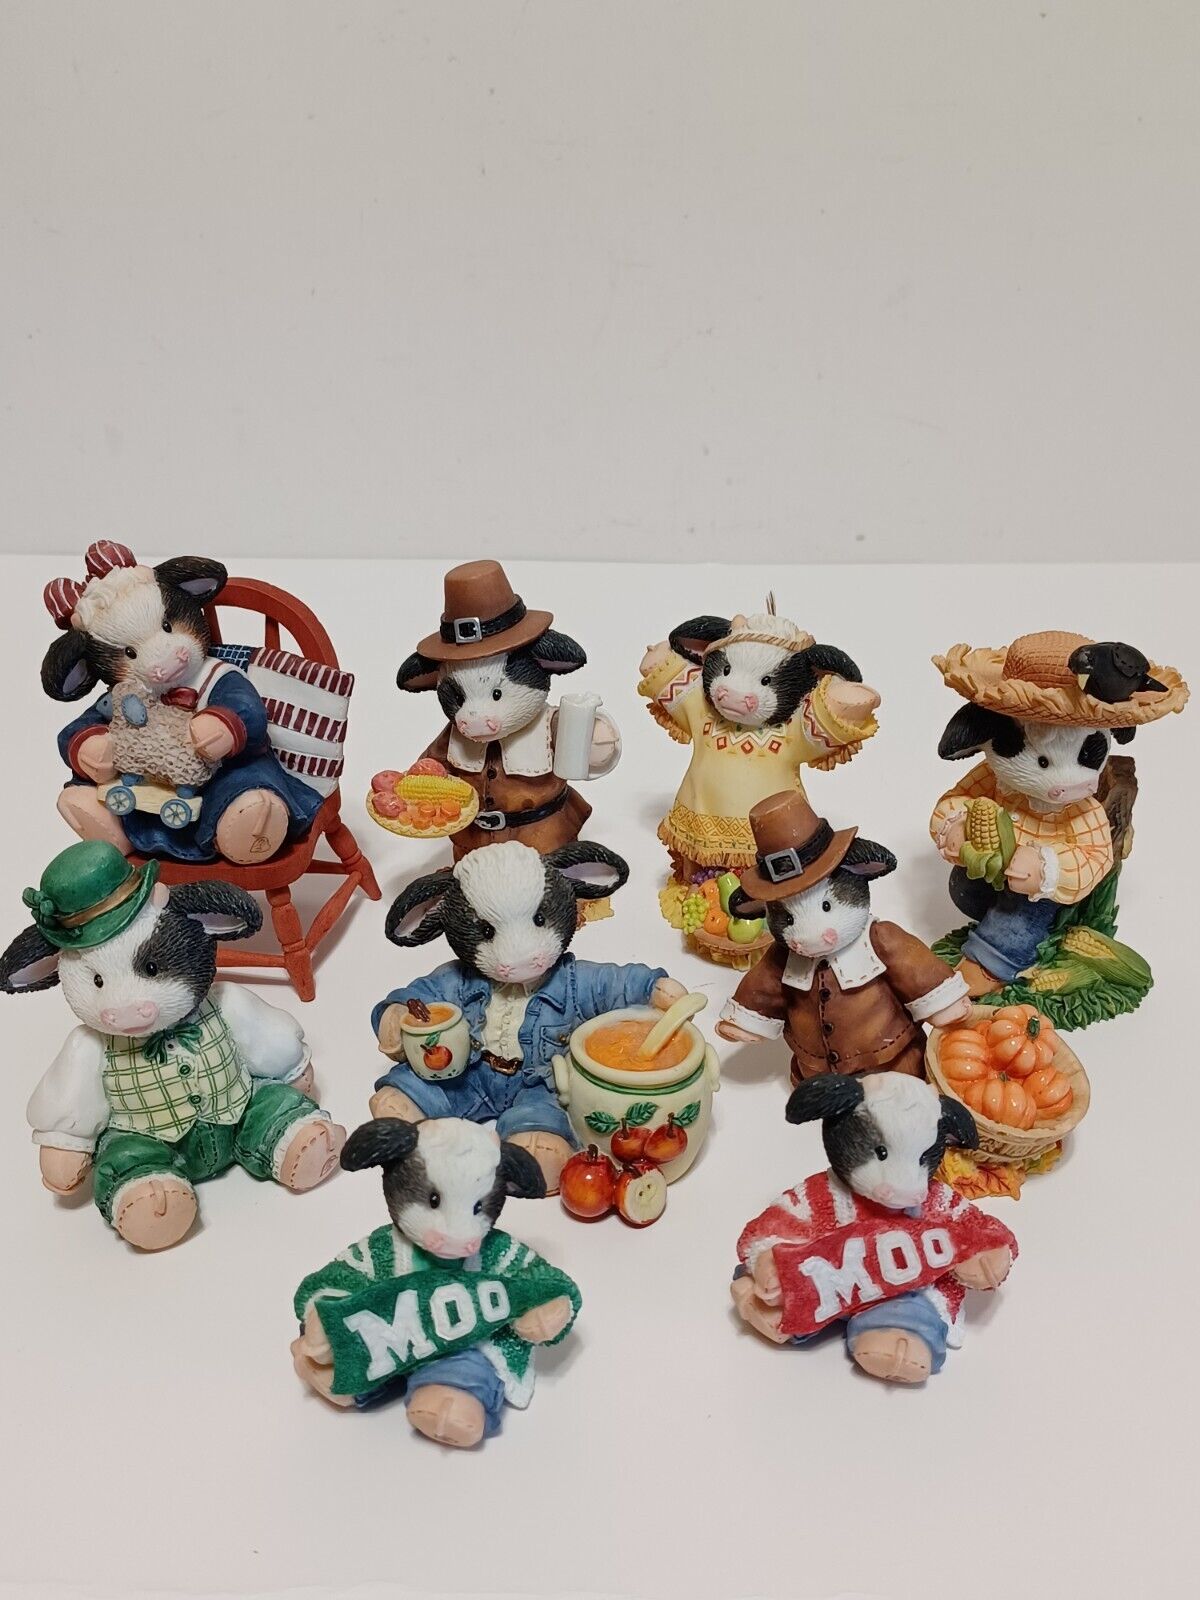 9 Vintage Mary's Moo Moos Collectible Cow Figurines + Bonus